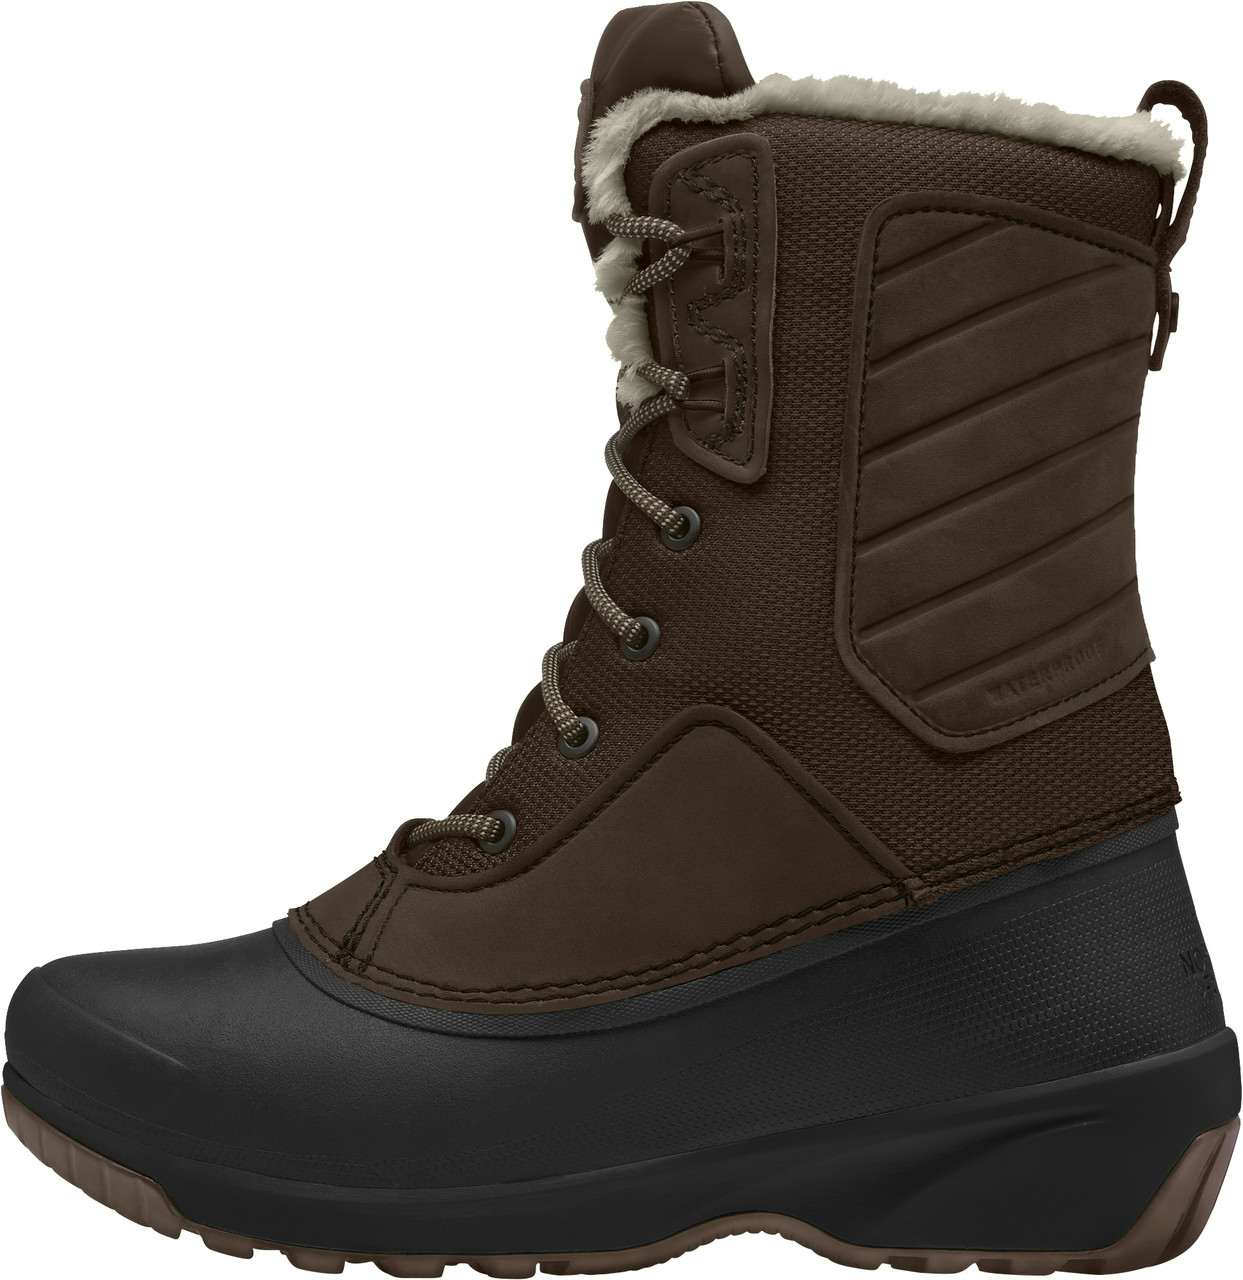 Shellista IV Mid Waterproof Boots Demitasse Brown/TNF Black